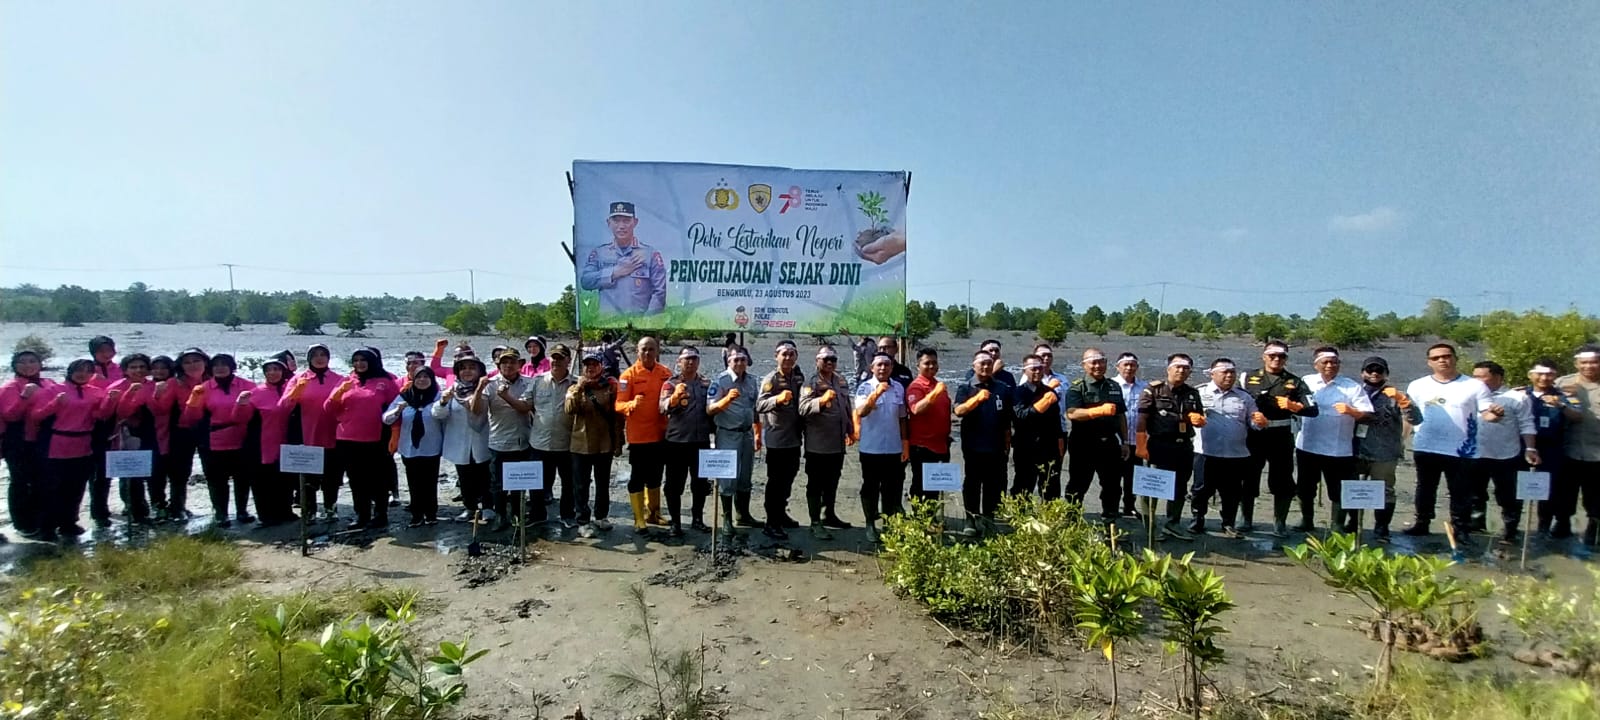 'Polri Lestari Negeri' Tanam 2.000 Bibit Mangrove Di Pantai Bengkulu, Targetnya 5.000 Pohon